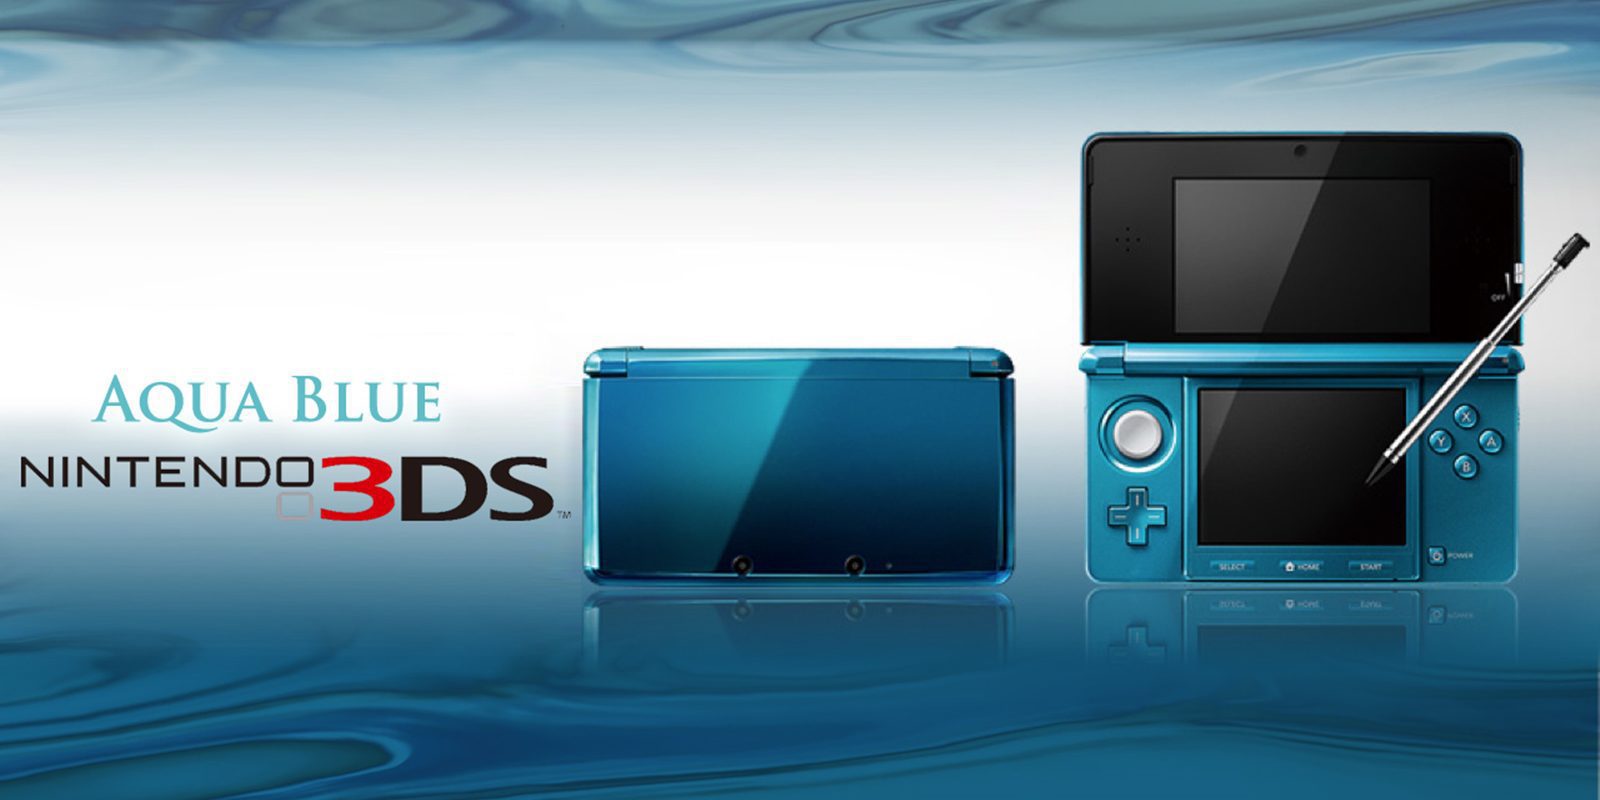 Comparativa de ventas - Nintendo 3DS vs PSP, batalla generacional